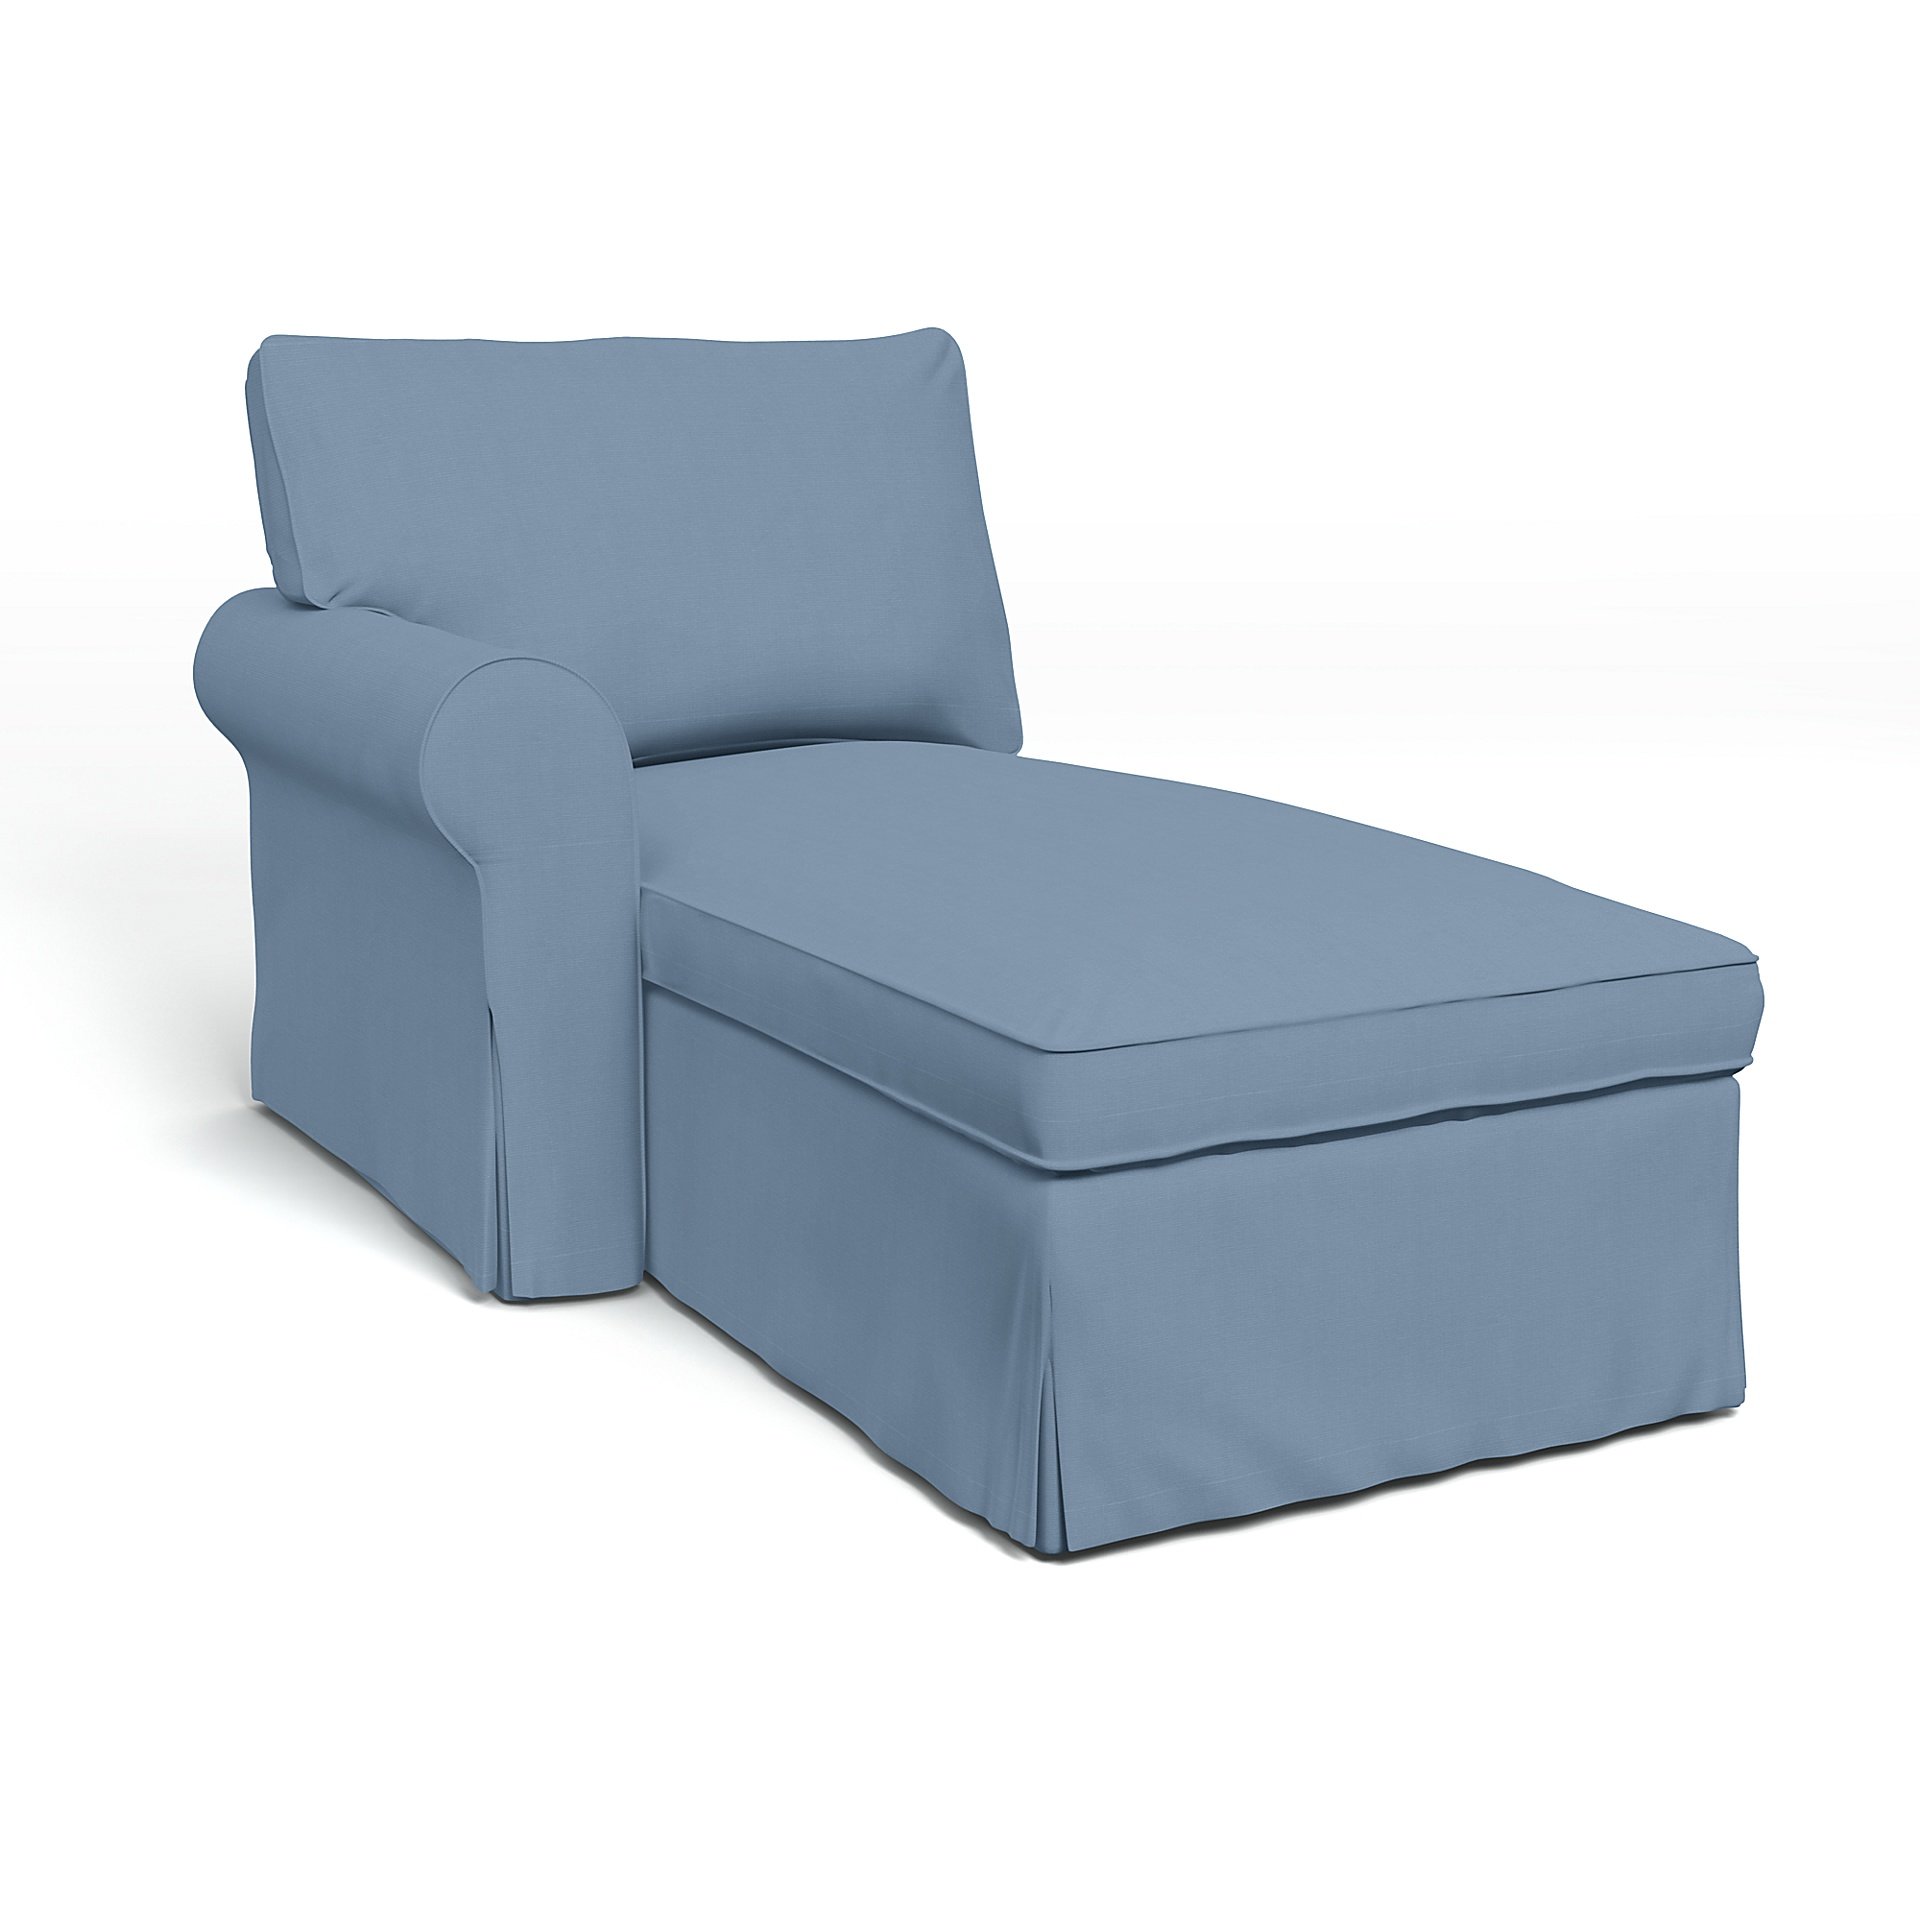 IKEA - Ektorp Chaise with Left Armrest Cover, Dusty Blue, Cotton - Bemz